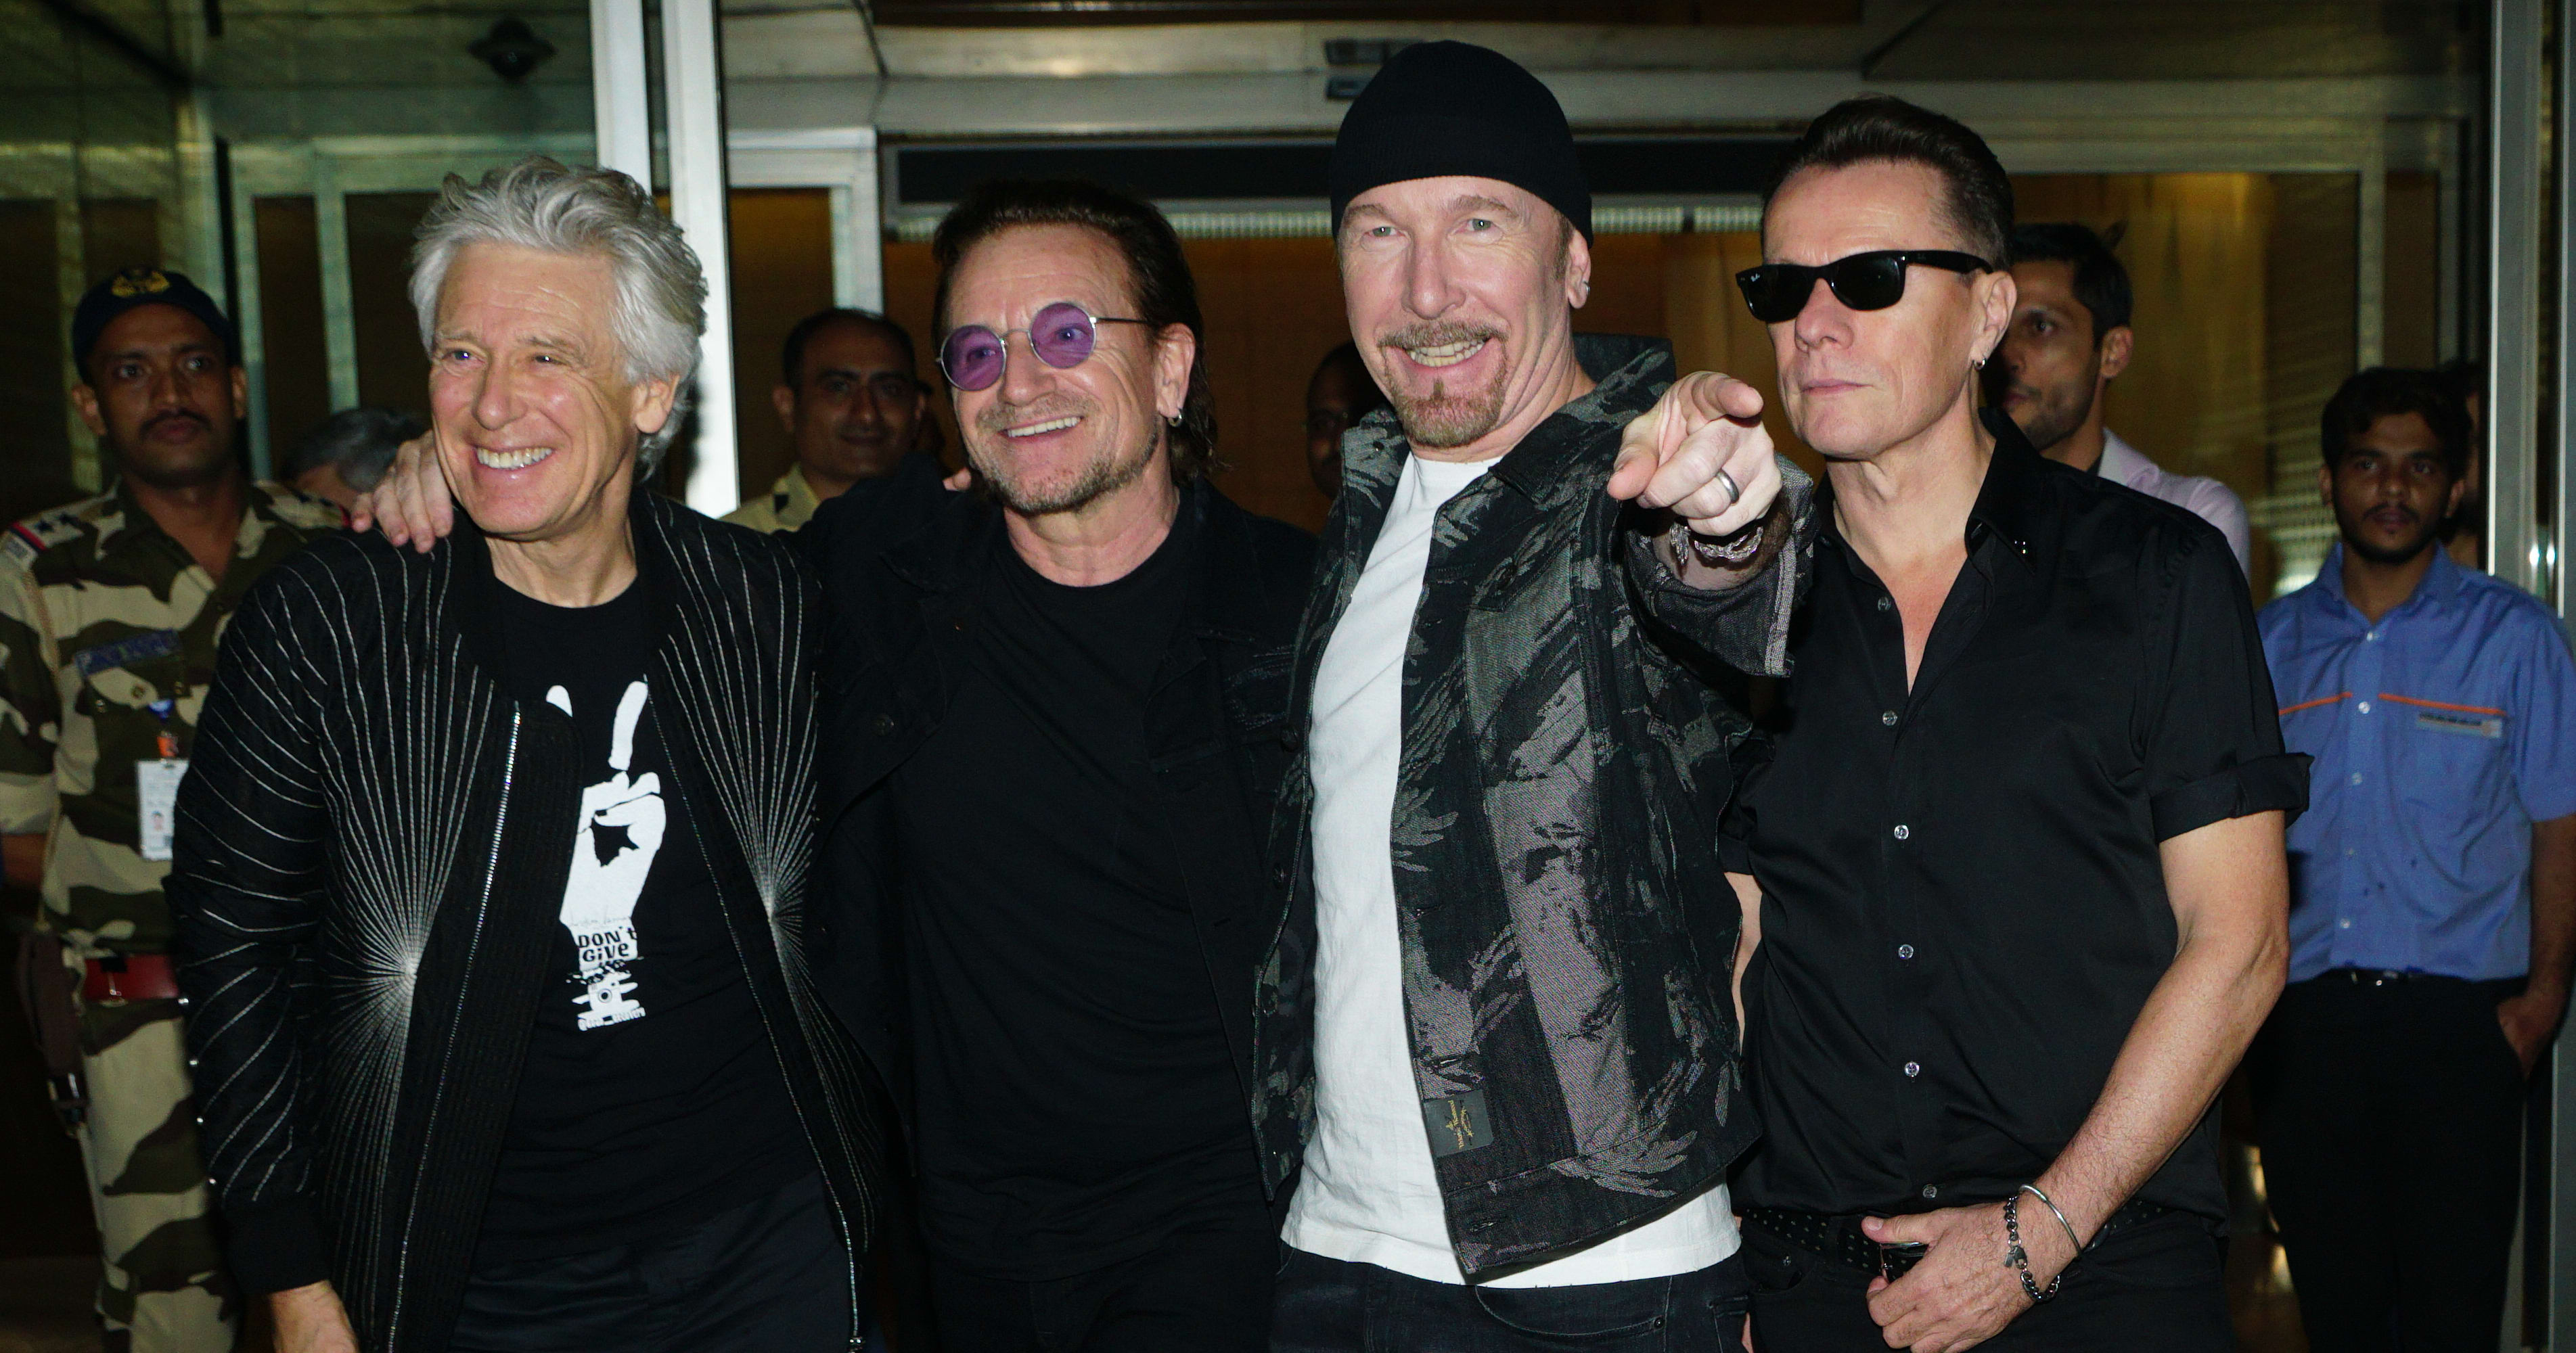 U2 band members invest in Irish tech fund hoping to raise $112 million